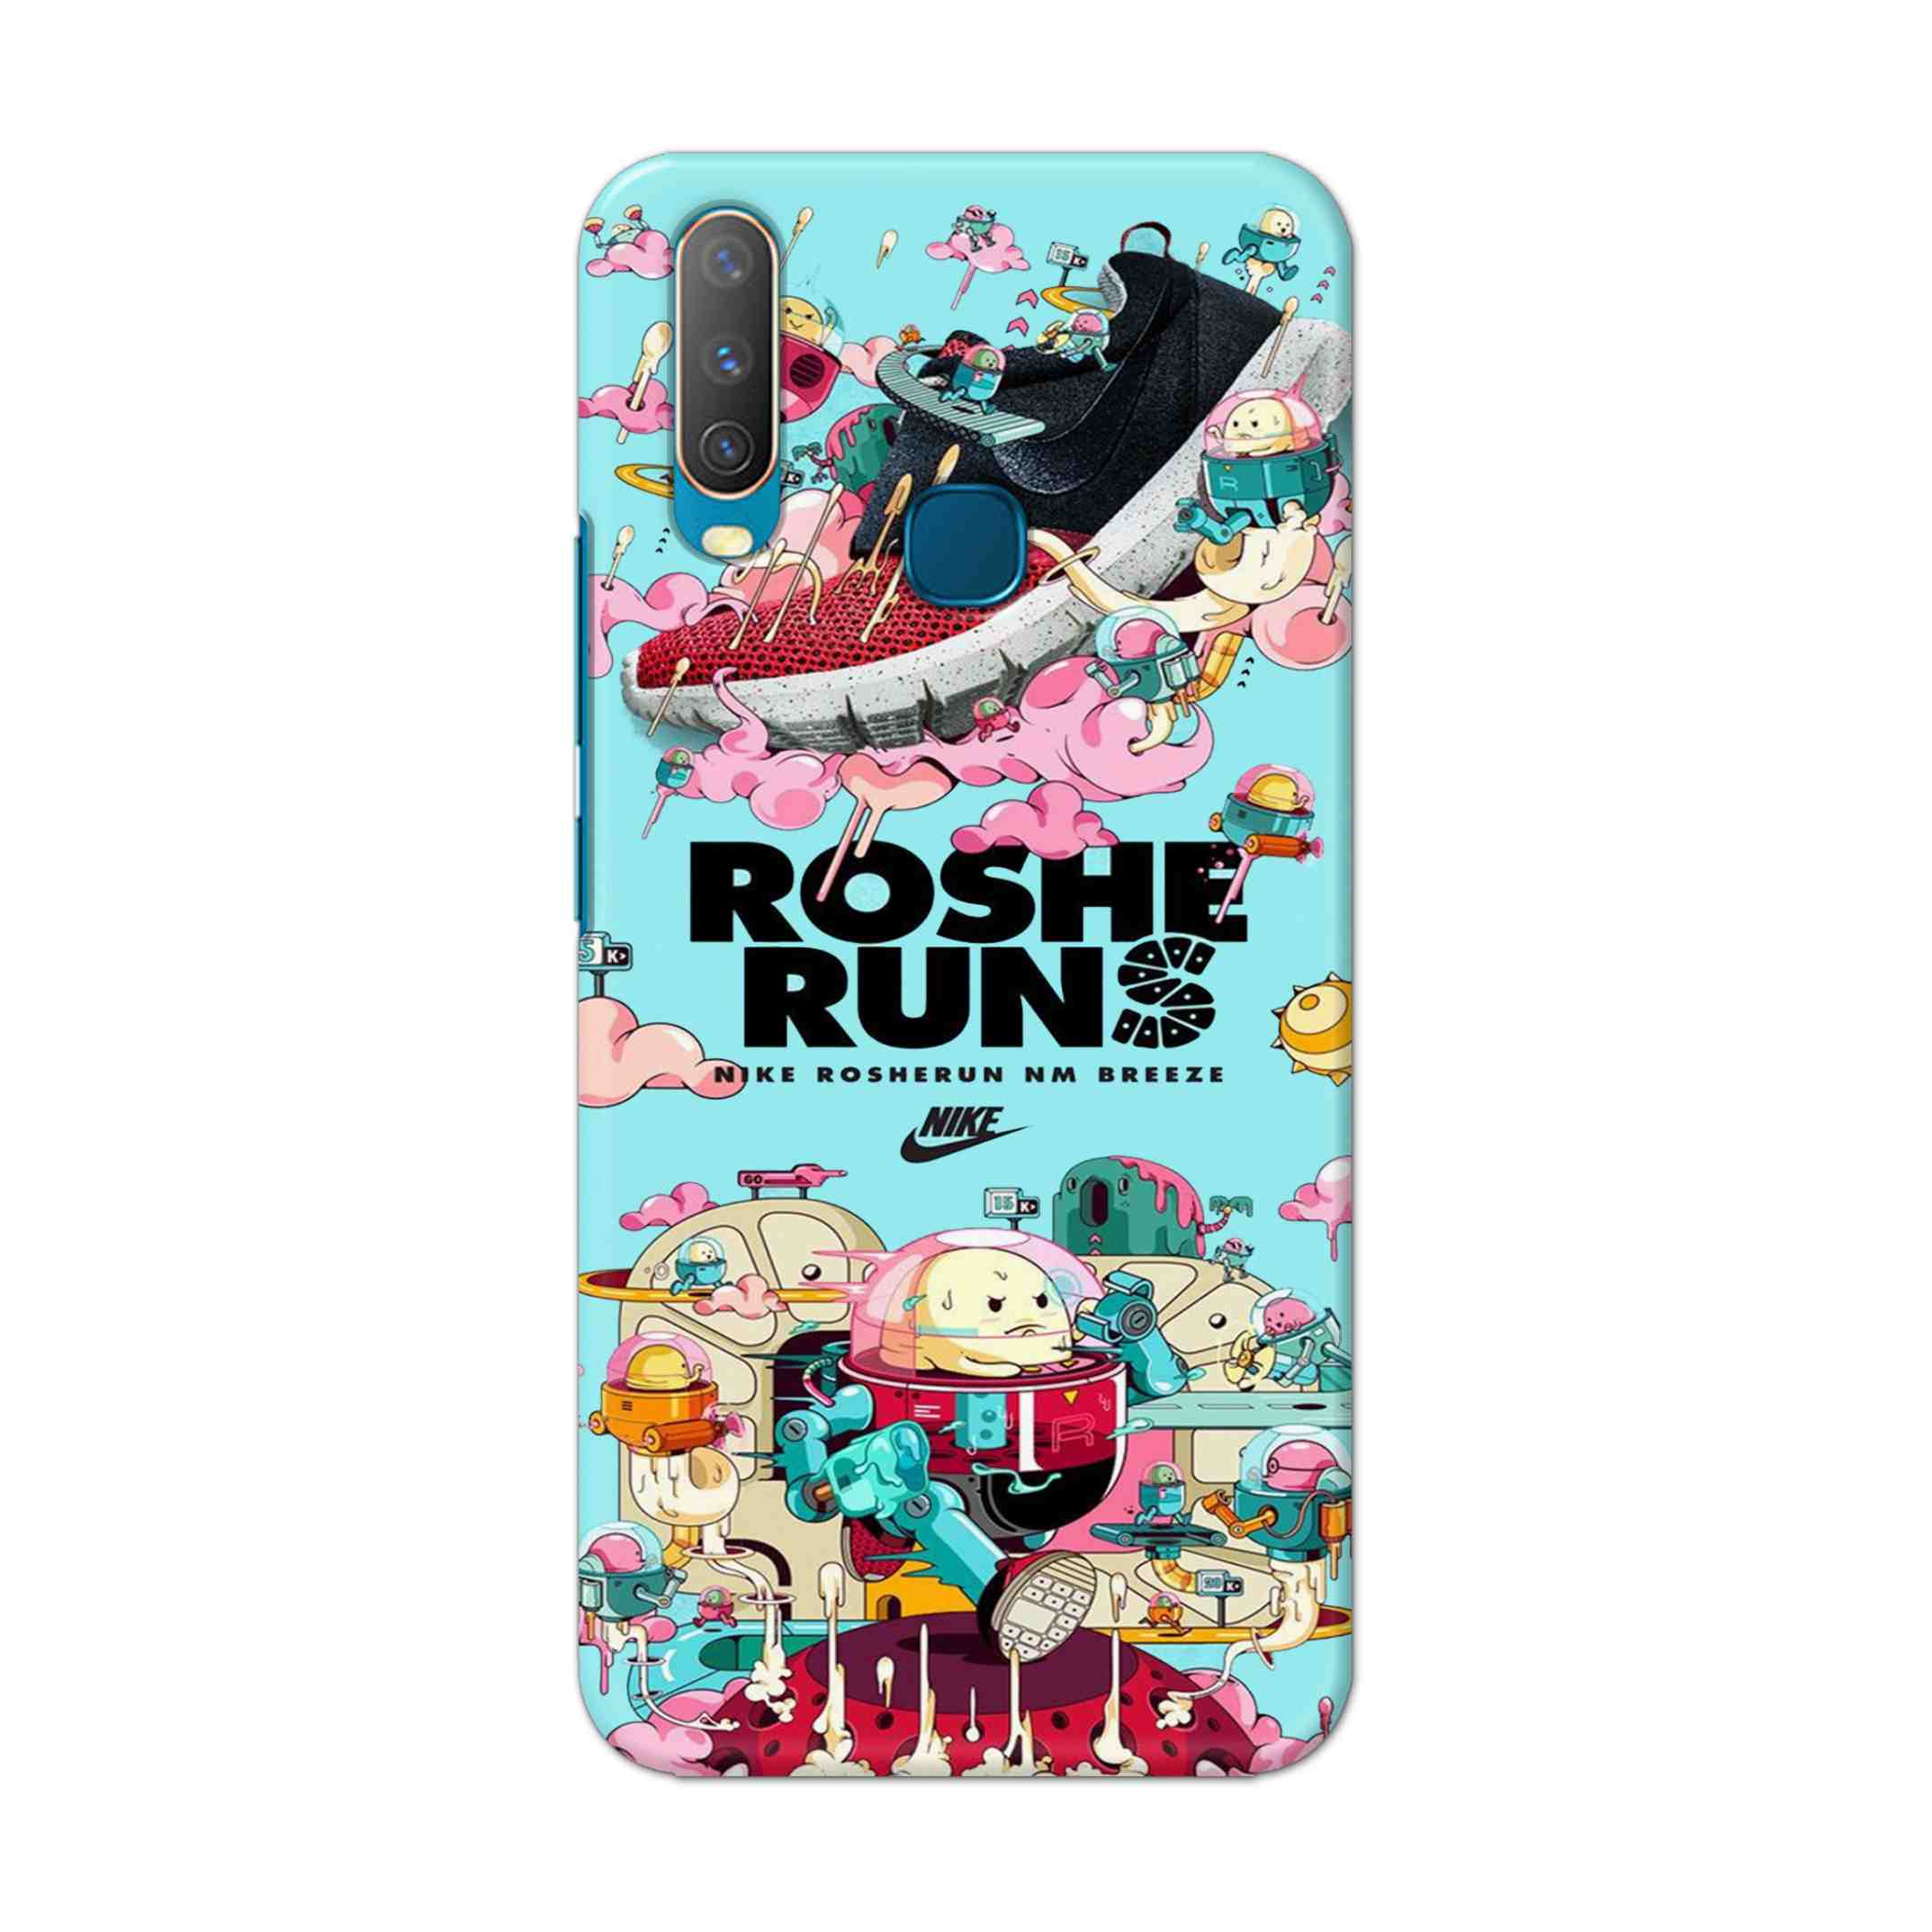 Buy Roshe Runs Hard Back Mobile Phone Case Cover For Vivo Y17 / U10 Online